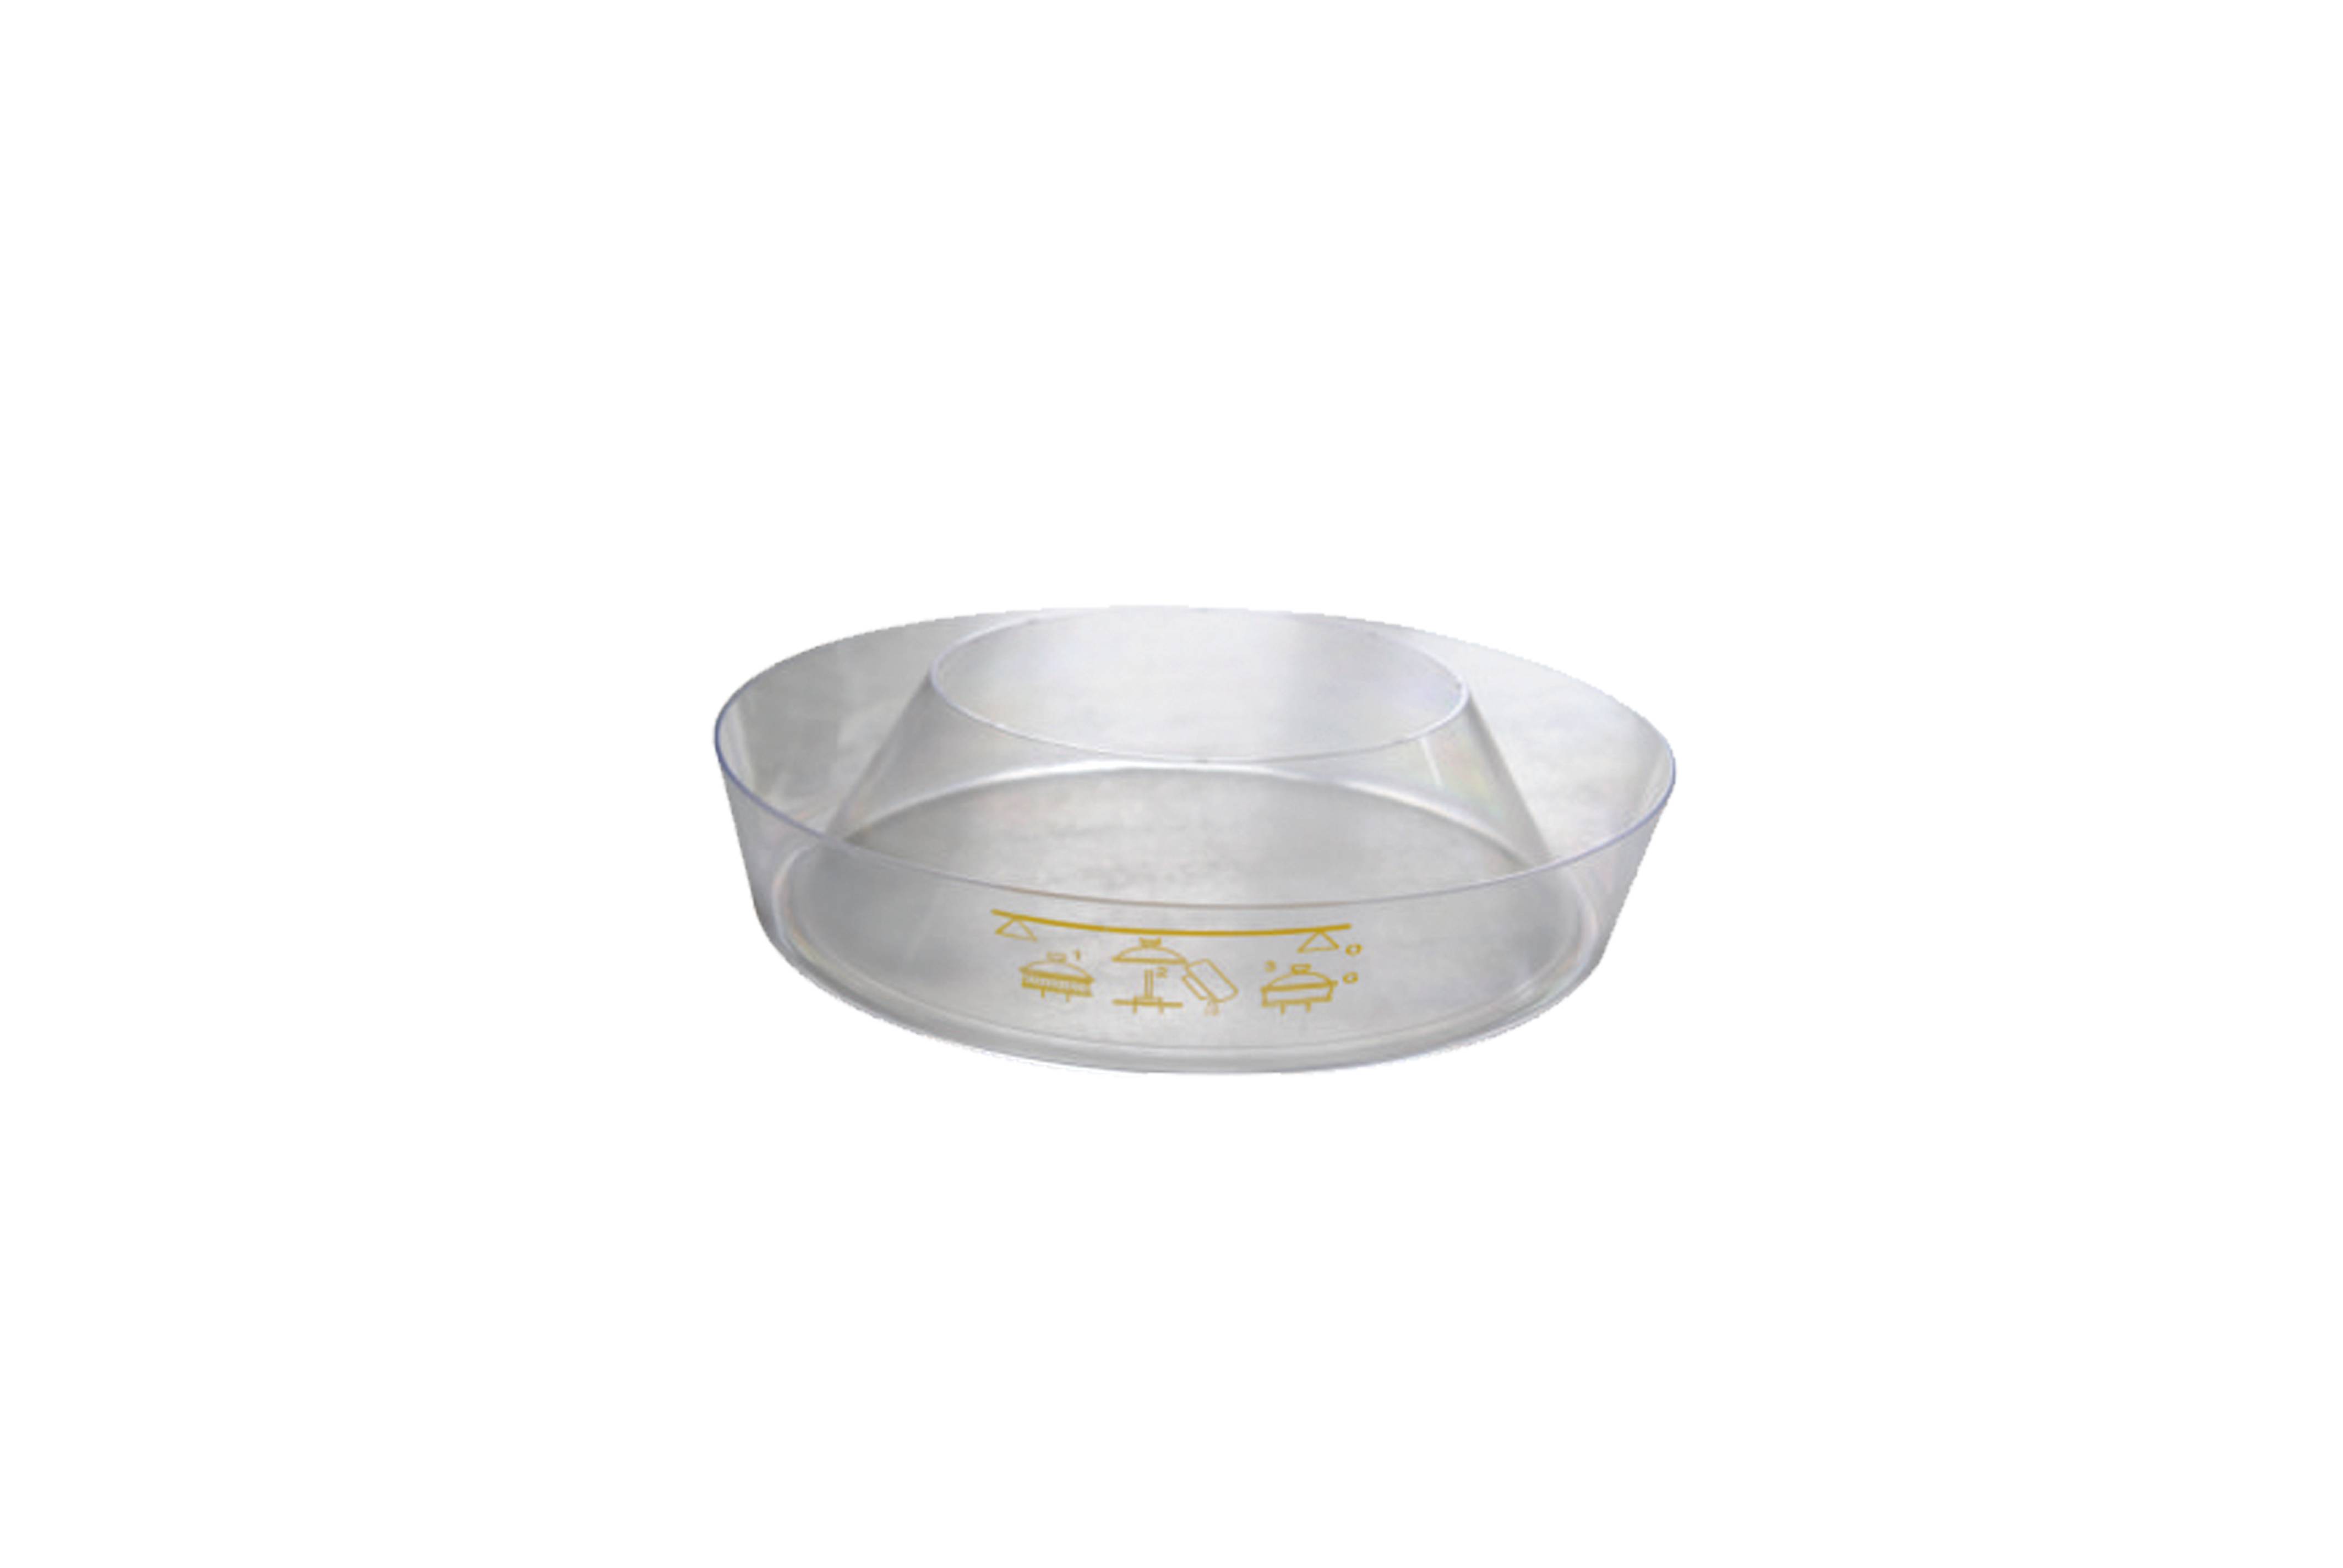 Air filter pre-cleaner bowl 10